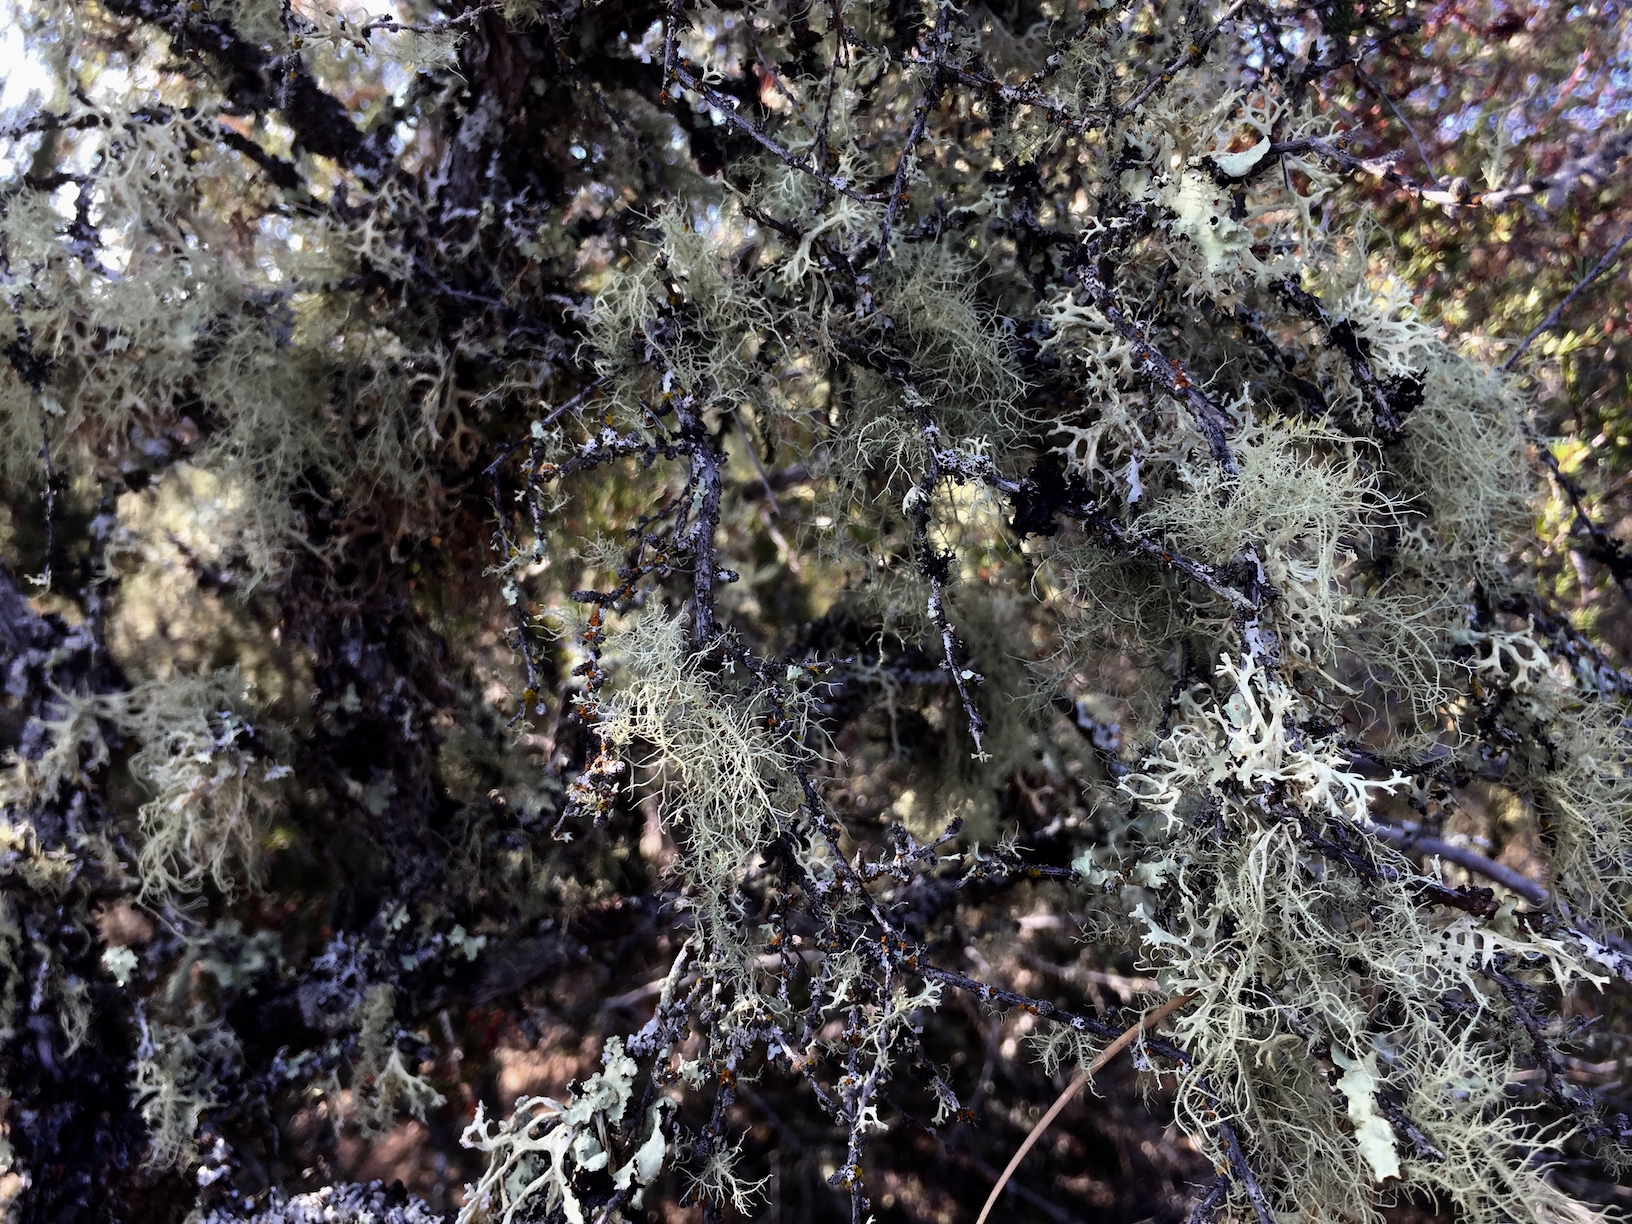 Old-growth lichens, including Usnea spp., Flavoparmelia caperata, Physcia rhizinata, Evernia prunastri, Cetraria merellii, Polycauliona sp., and Parmelia sp., drape off a branch in chaparral shrubland at the Quail Ridge Reserve (Jesse Miller)